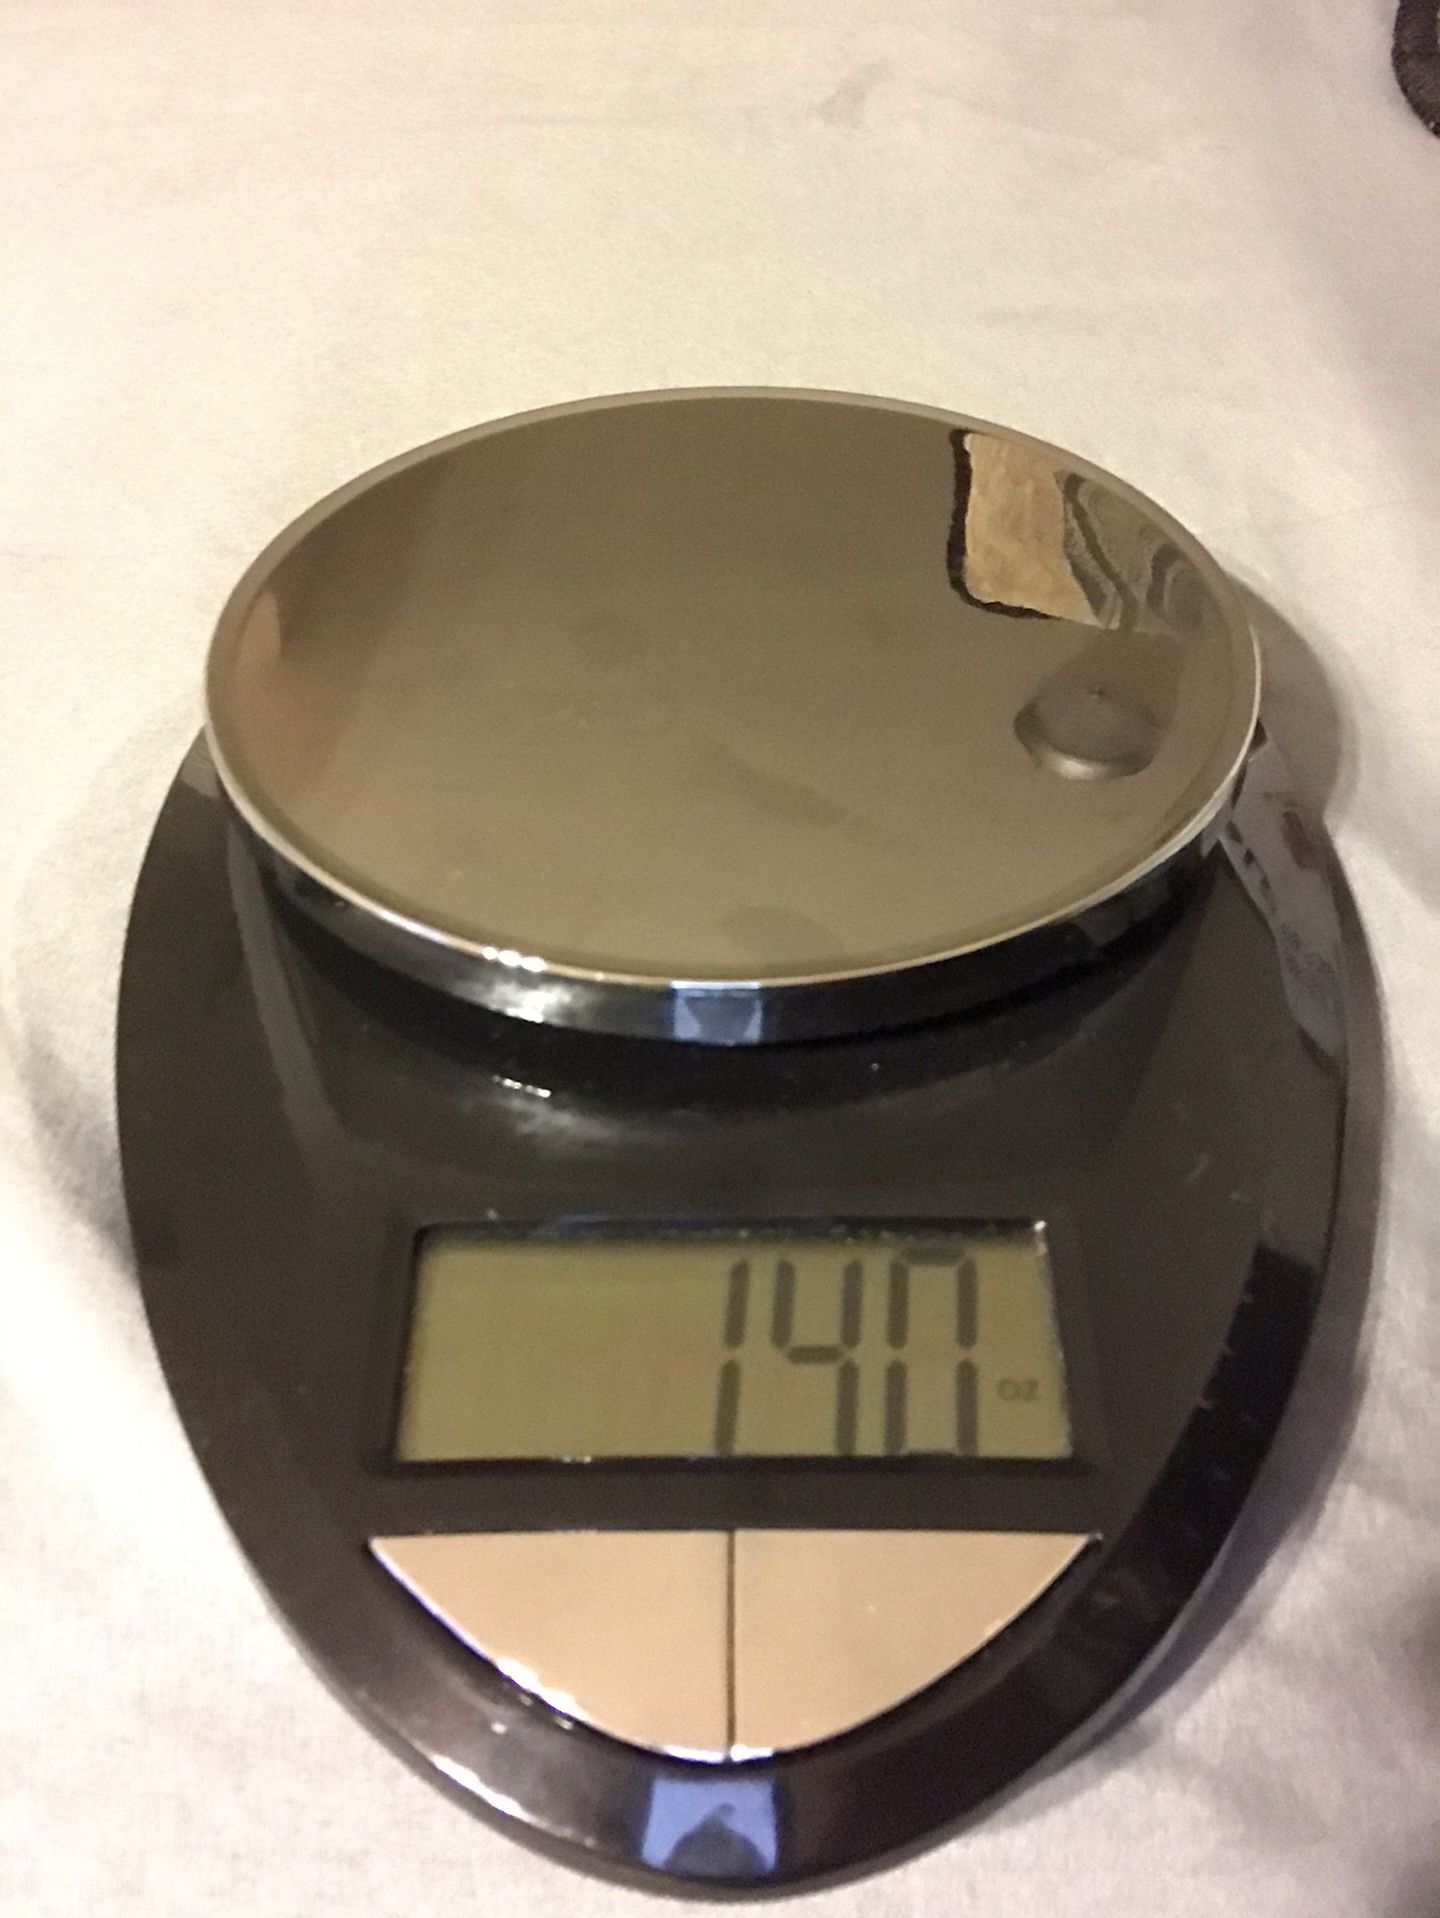 Eatsmart precision pro kitchen scale